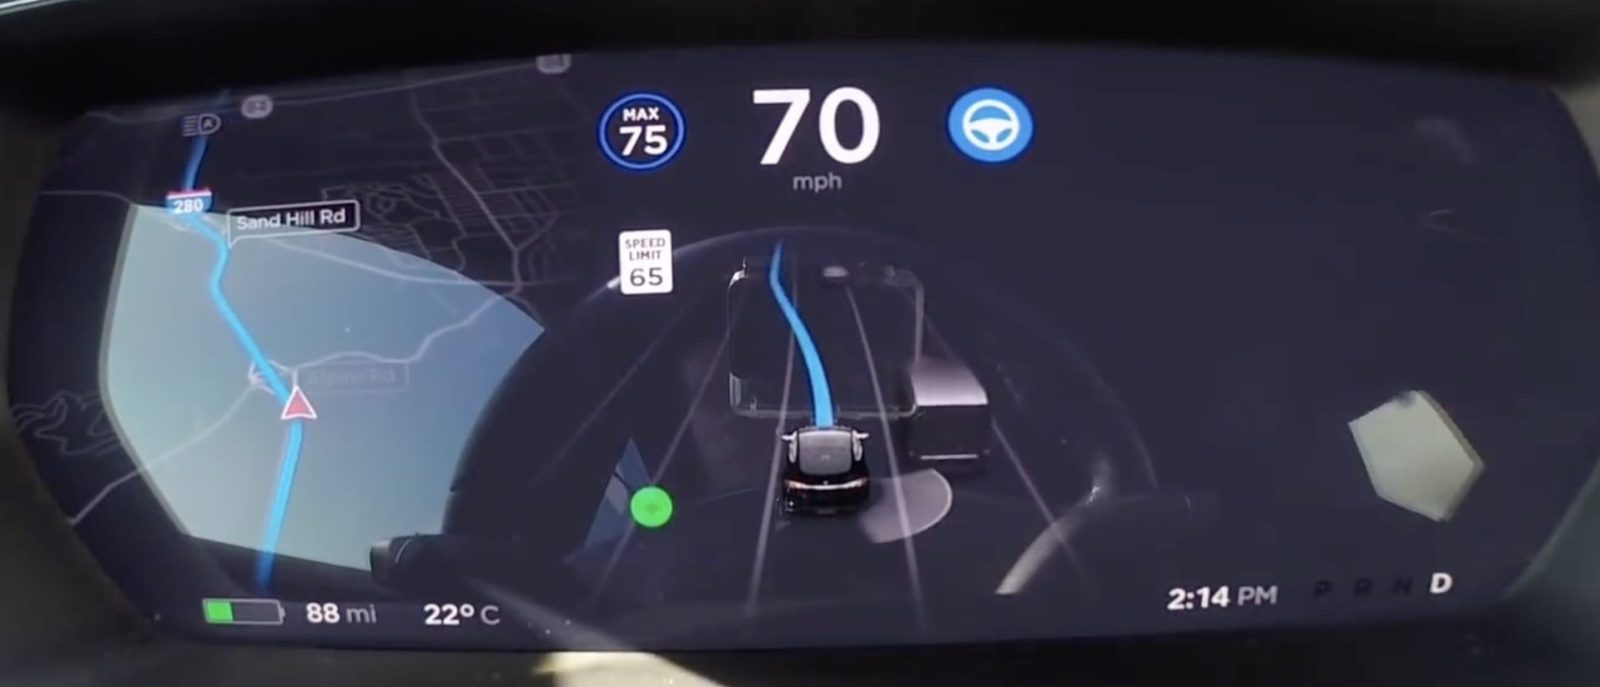 Tesla Starts Releasing Navigate On Autopilot Feature With